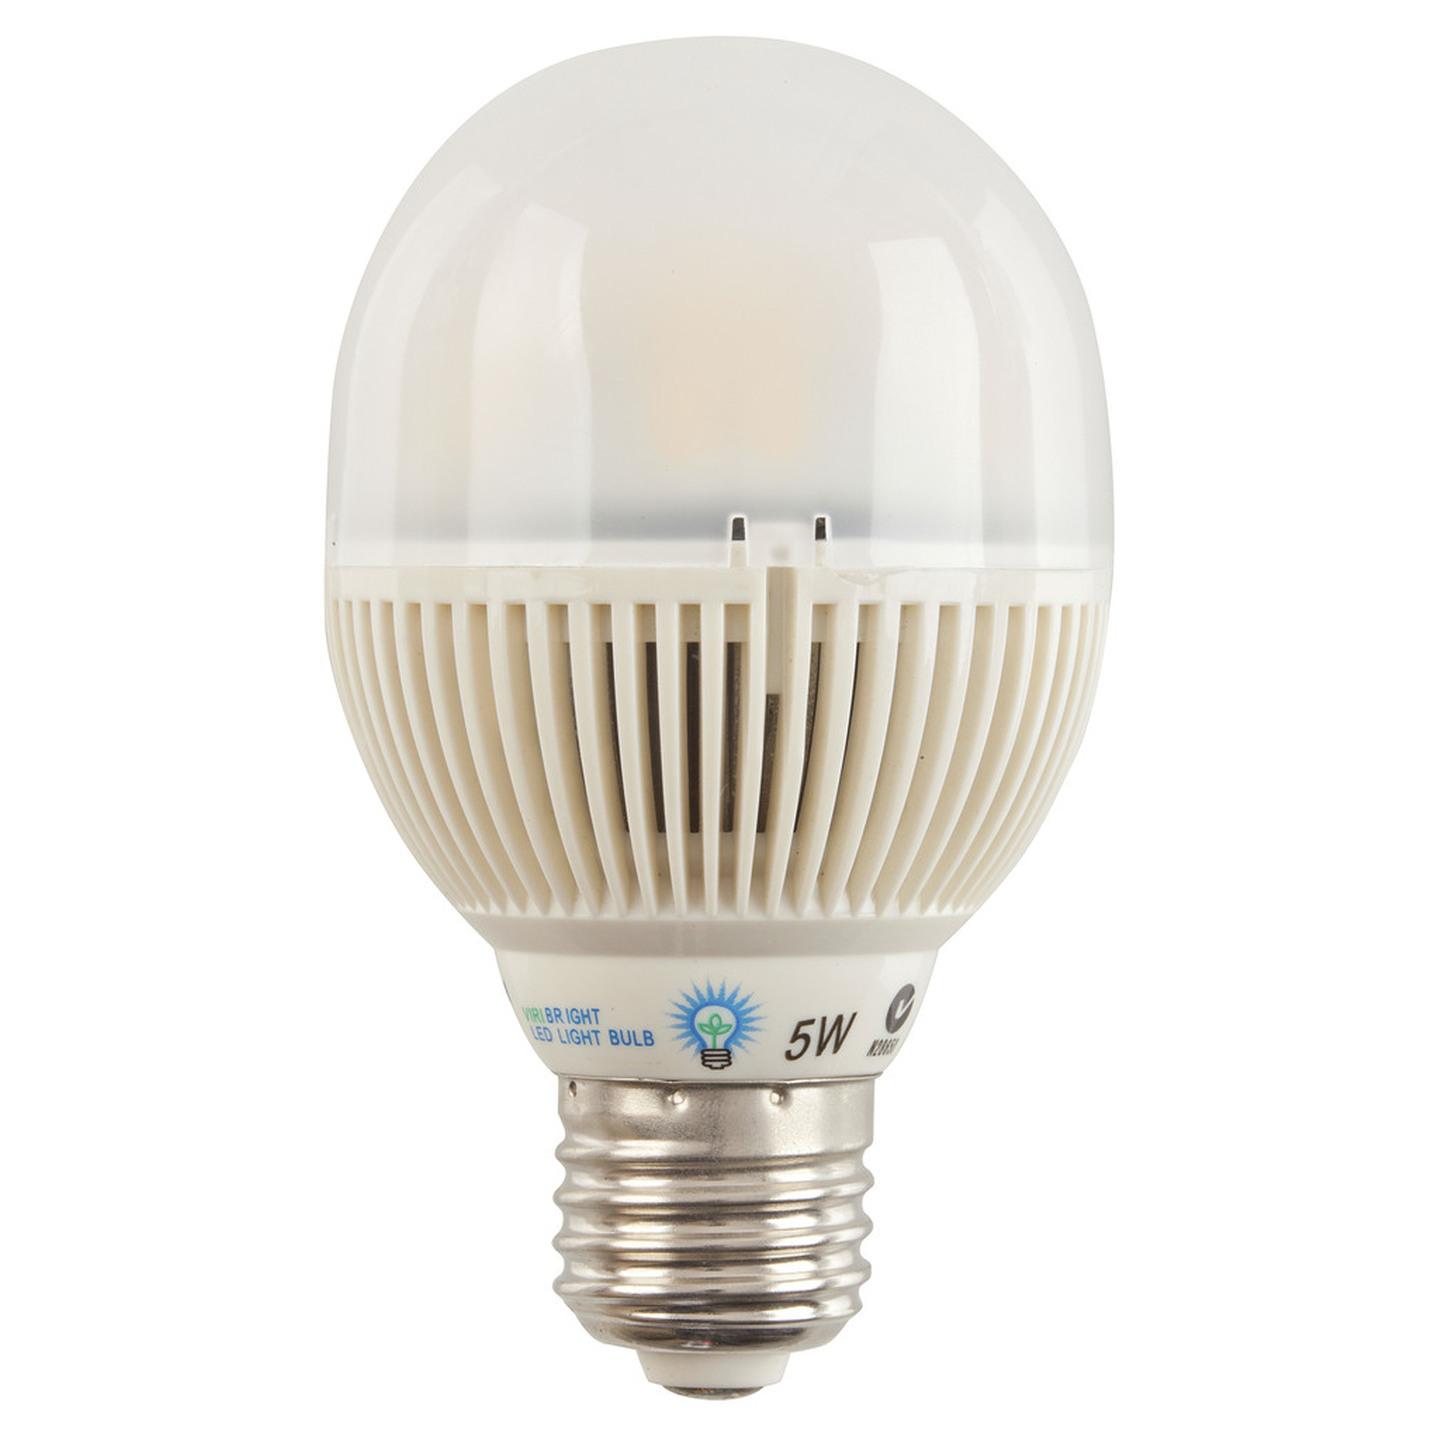 5W Mains LED Light Globe Natural White Screw cap